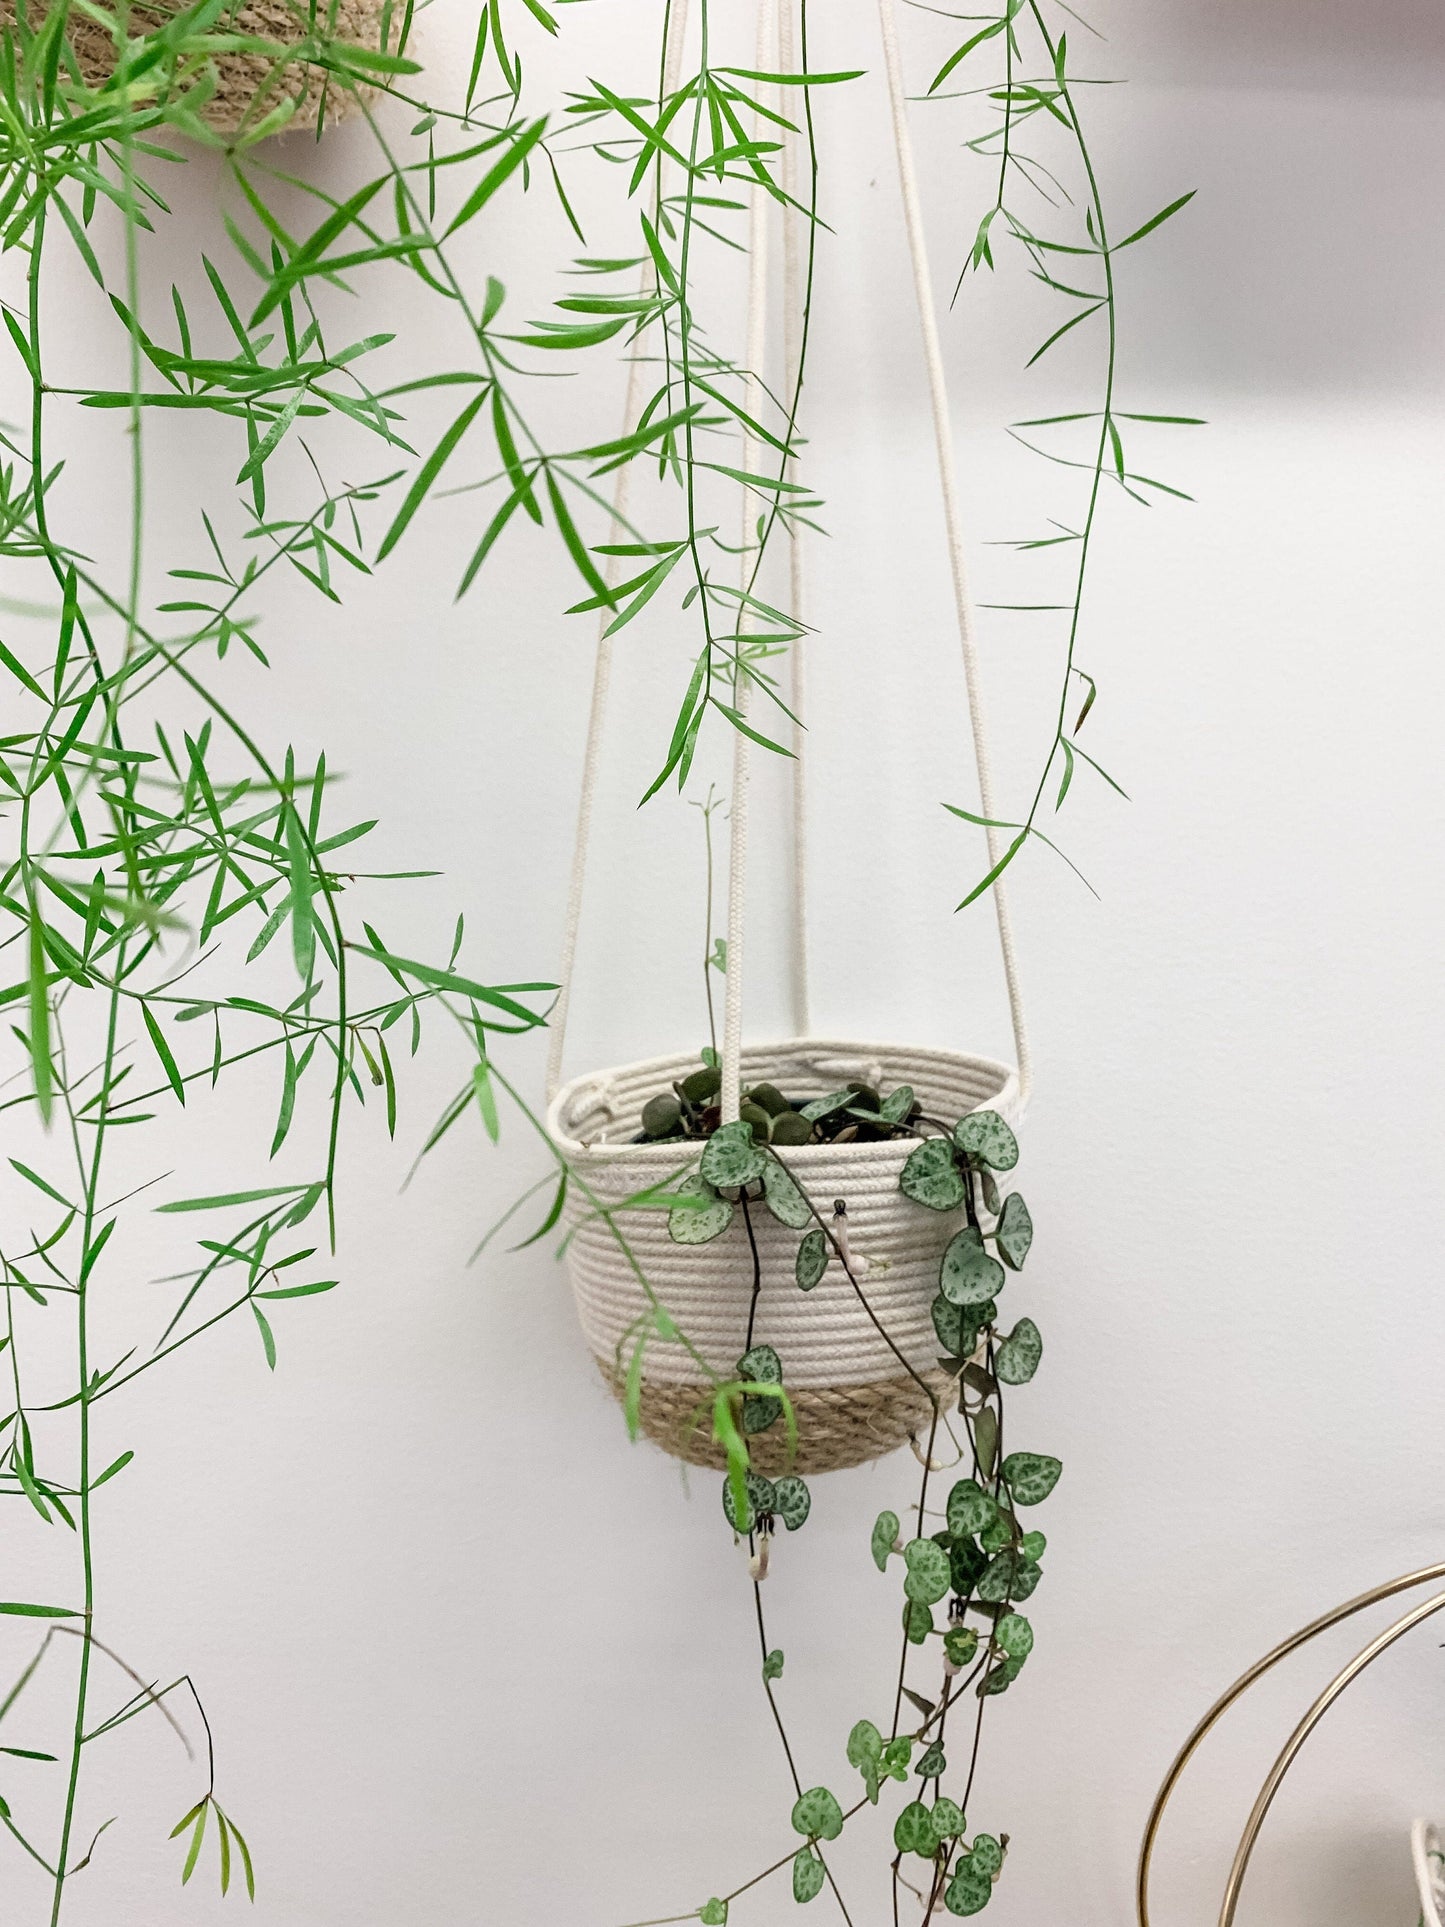 4 inch Cotton/Jute Hanging Basket Planter - Handmade